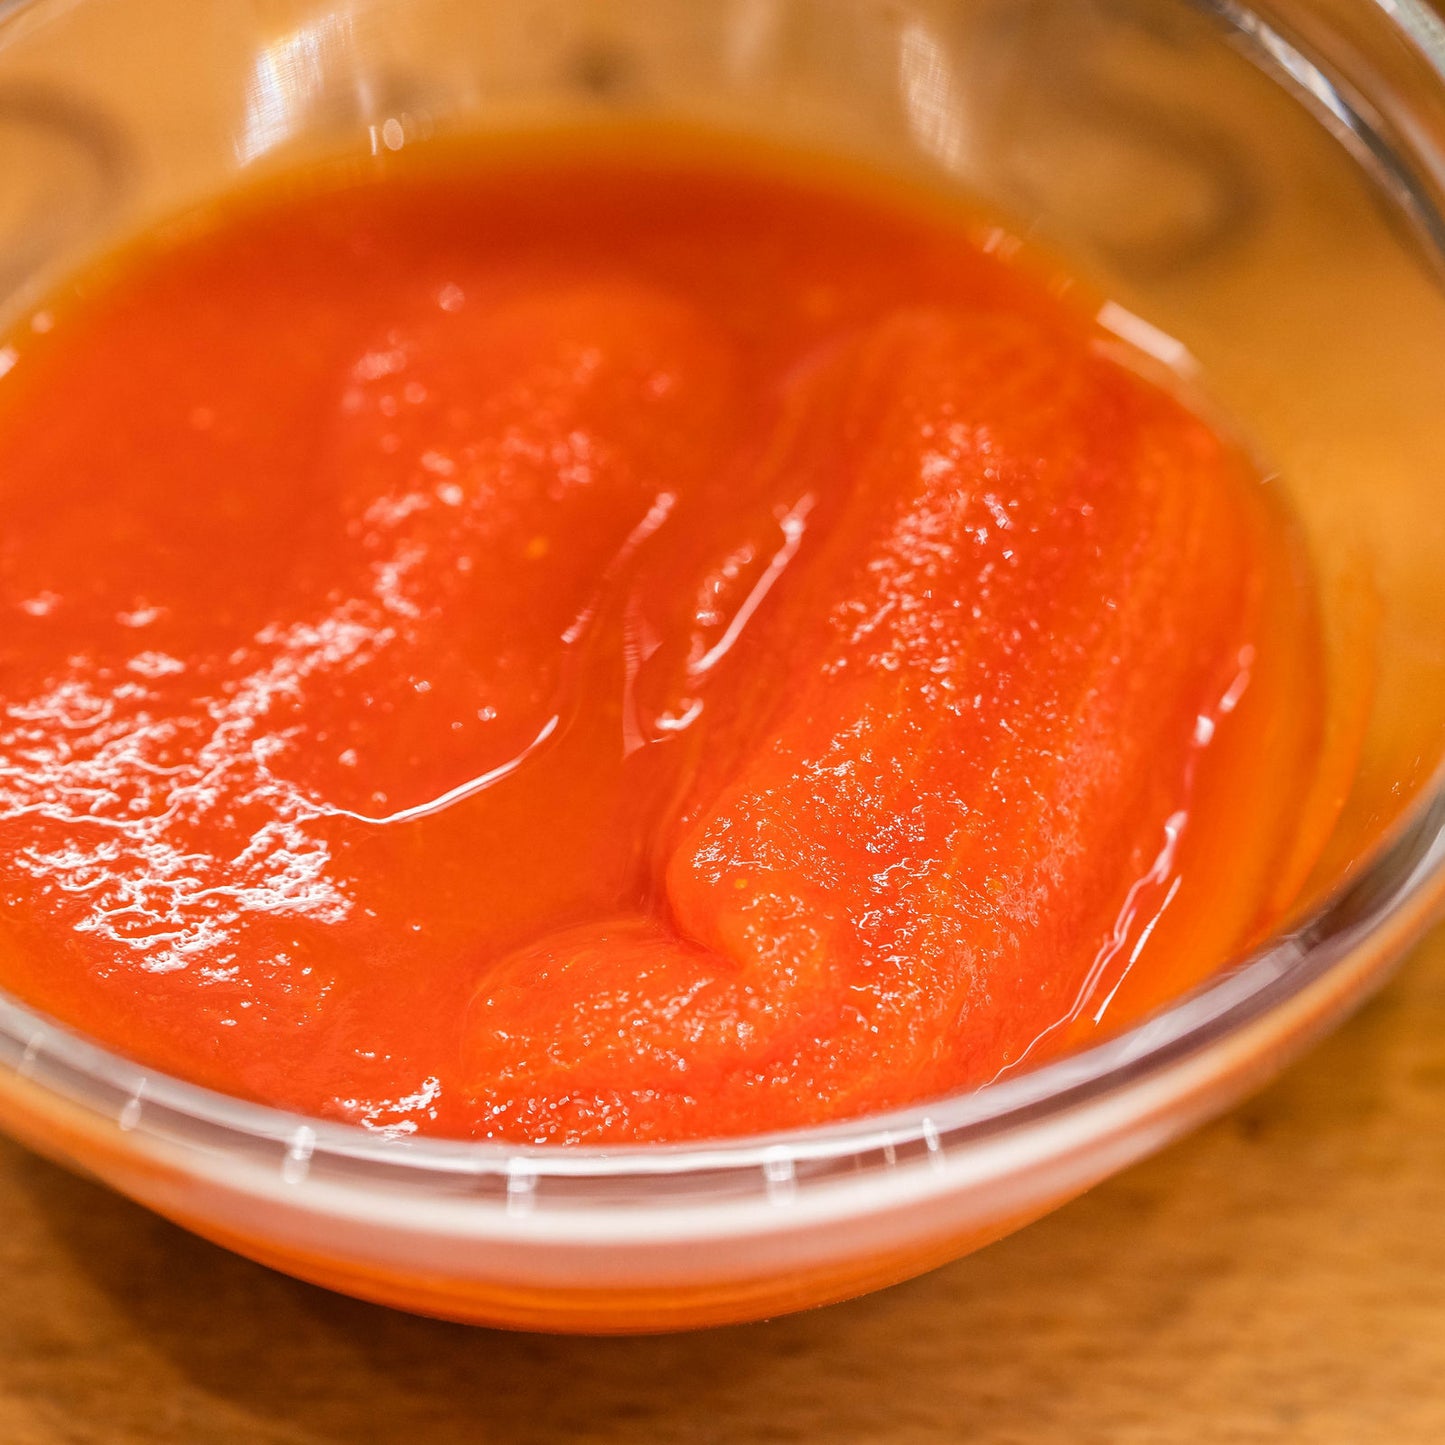 Peeled tomatoes in juice